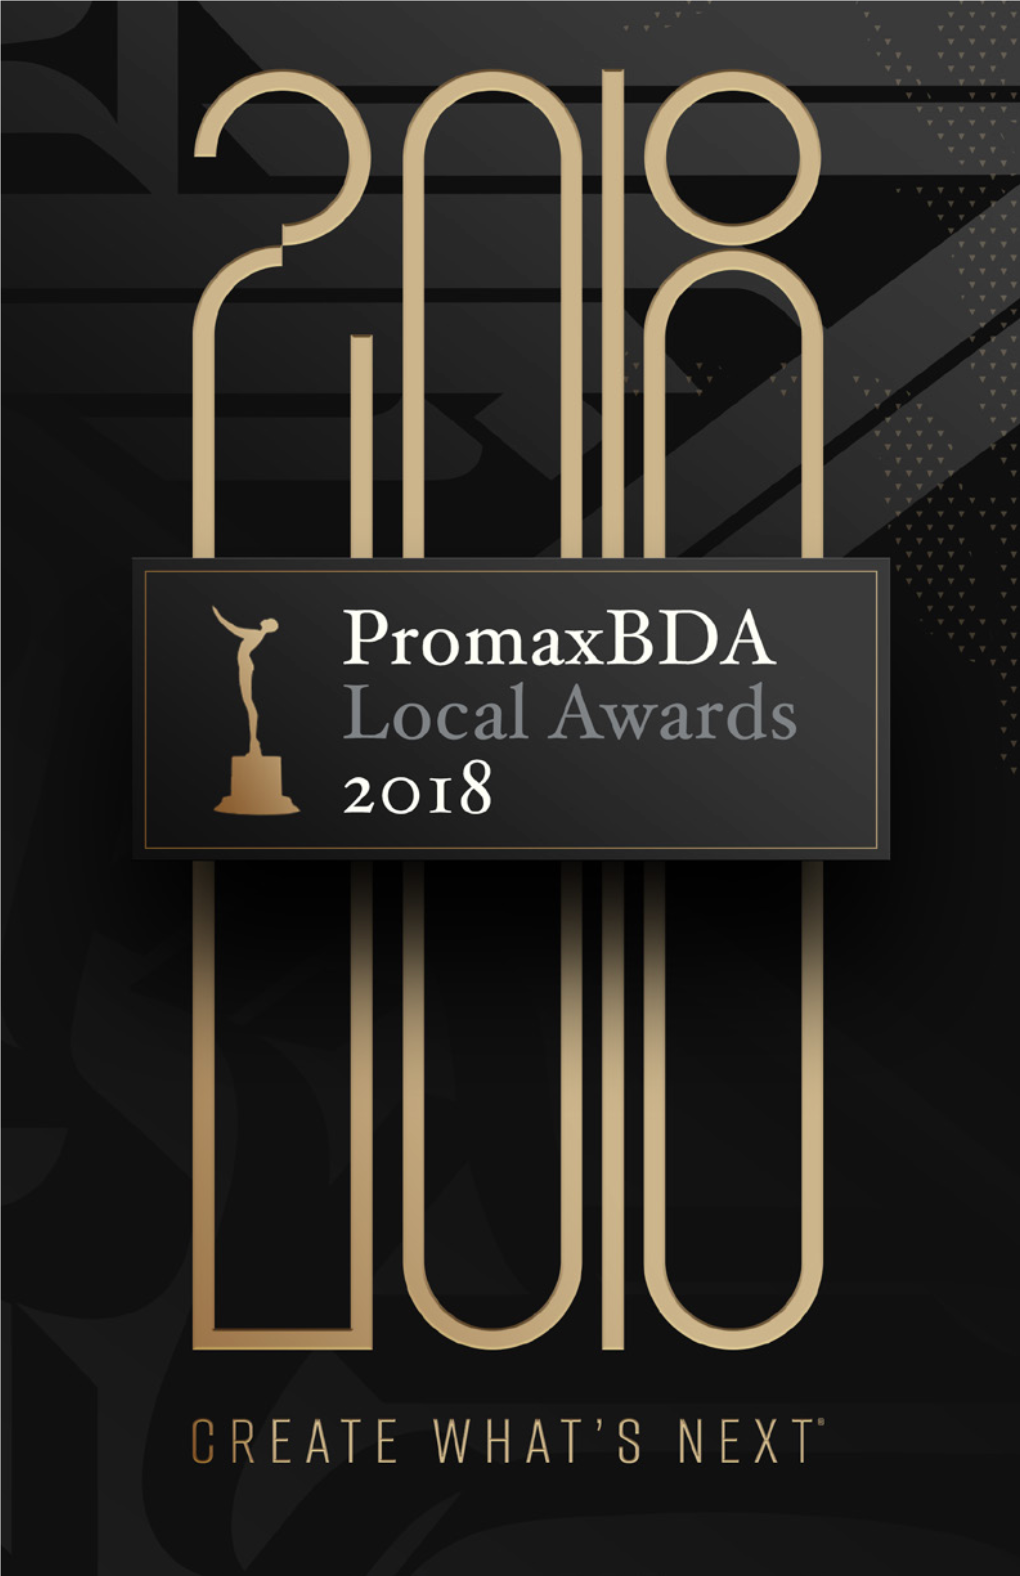 Congratulations to the Promaxbda Awards at Station Summit 2018